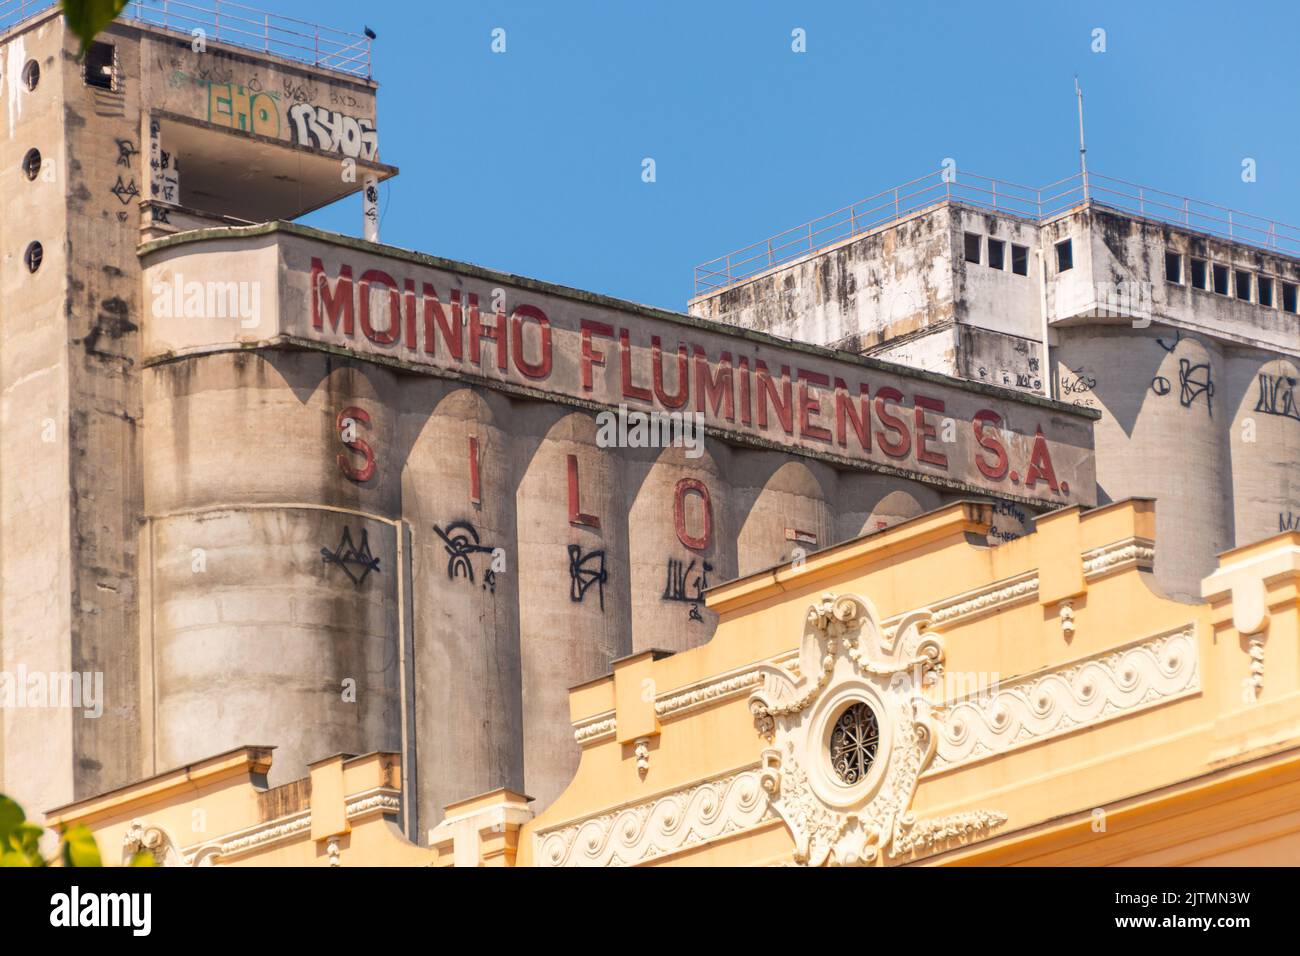 Fassade des Gebäudes der Fluminense Mühle in Rio de Janeiro, Brasilien - 6. September 2020: Fassade des alten Gebäudes der Fluminense Mühle in der Stockfoto